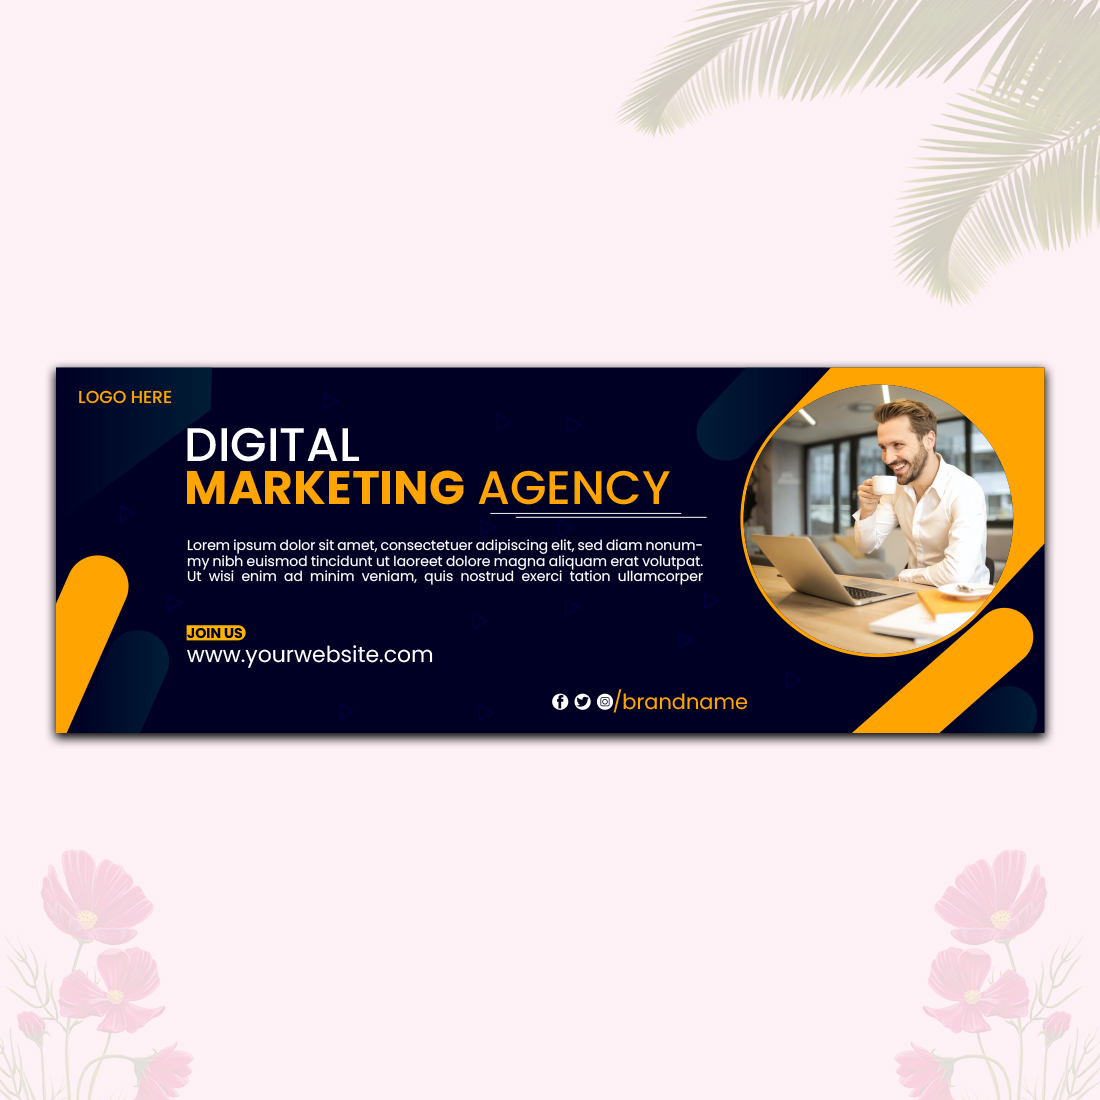 Digital Marketing Agency Facebook Cover Design Template.